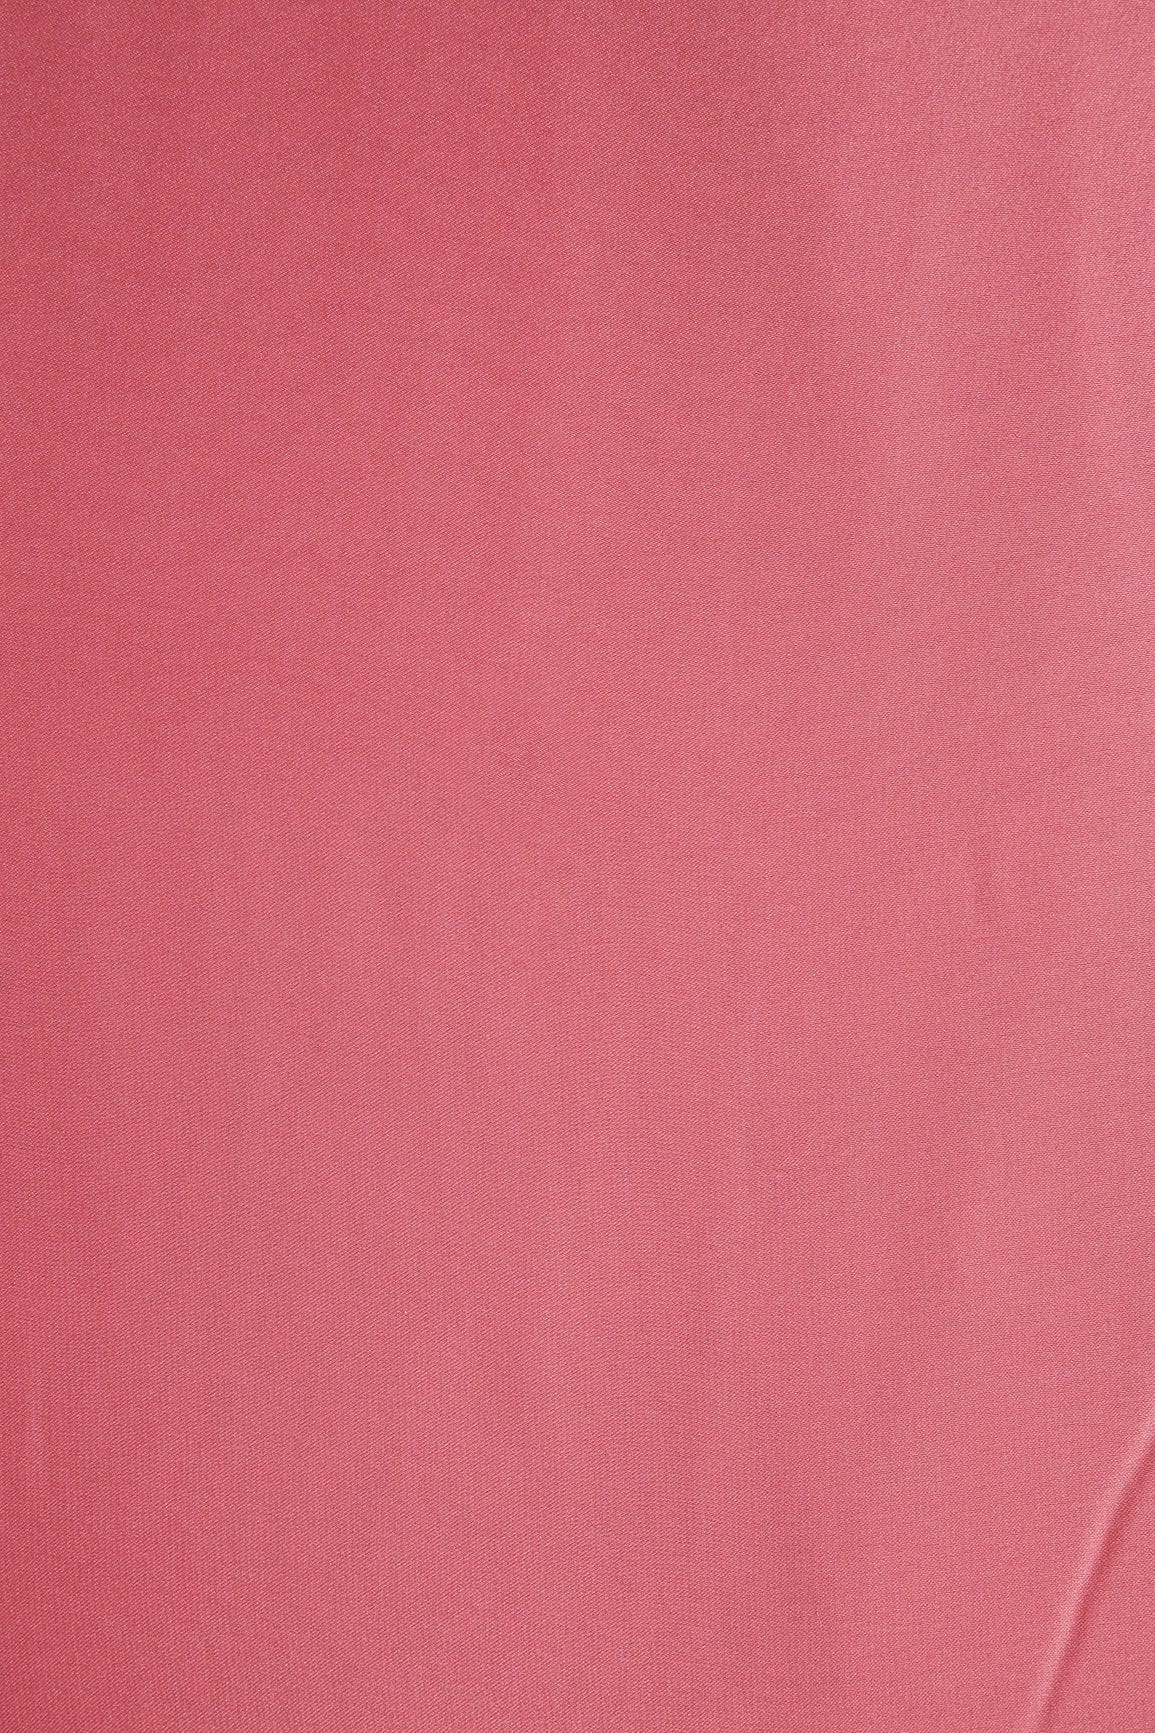 doeraa Plain Fabrics Dusty Pink Dyed Georgette Satin Fabric